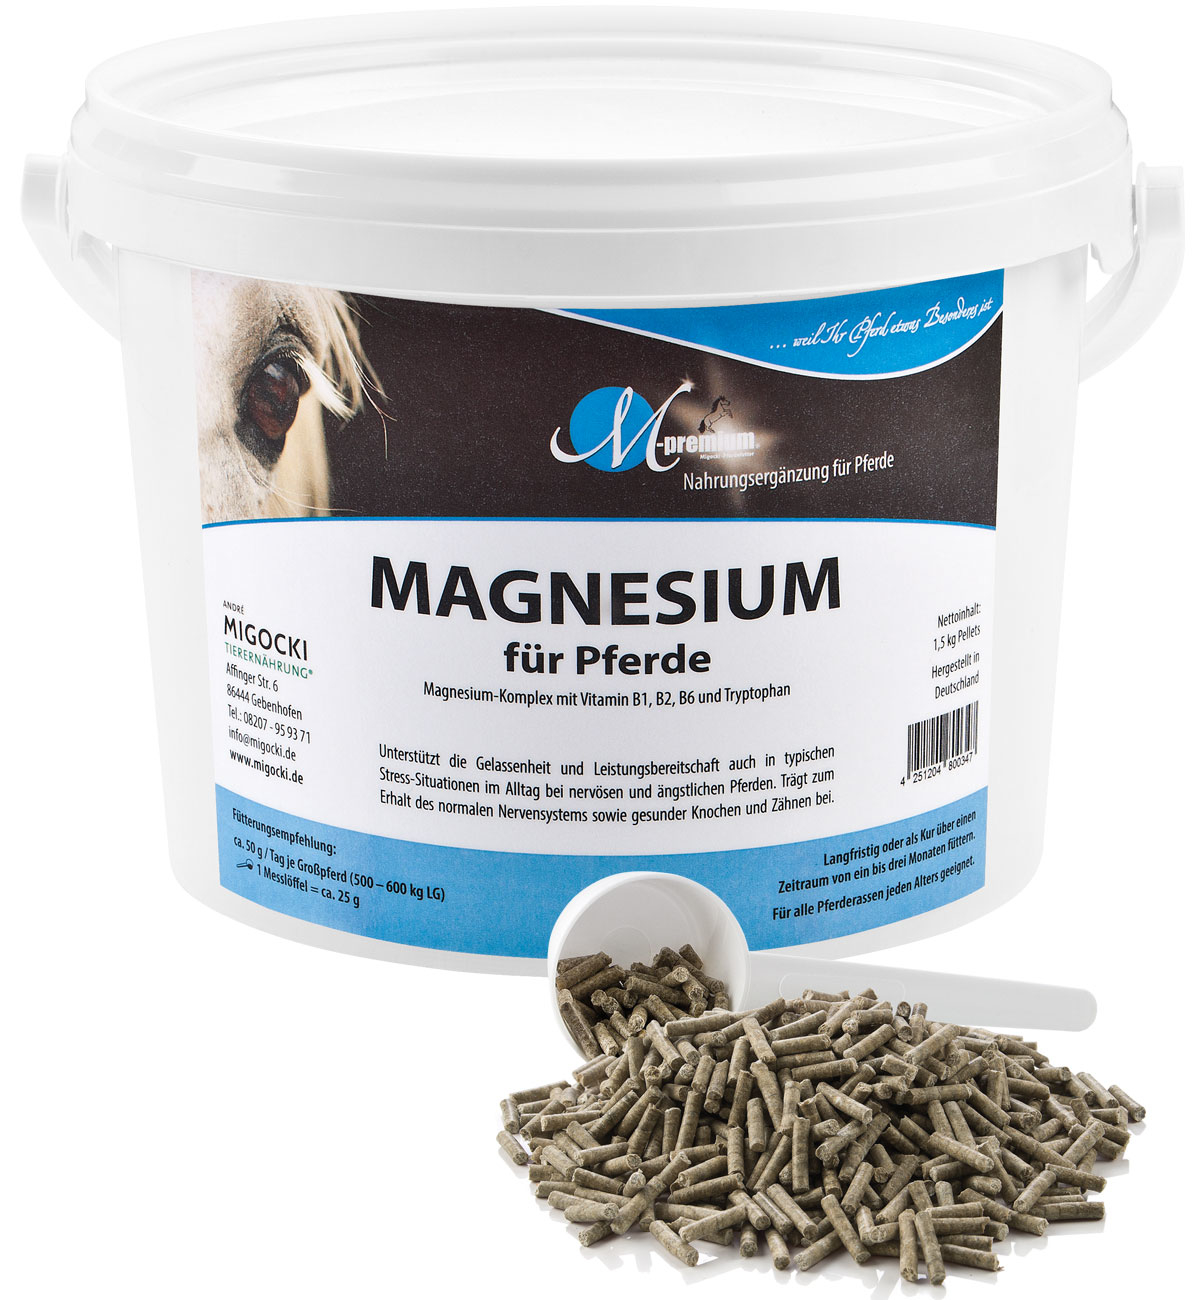 Magnesium Produkt Ratgeber 